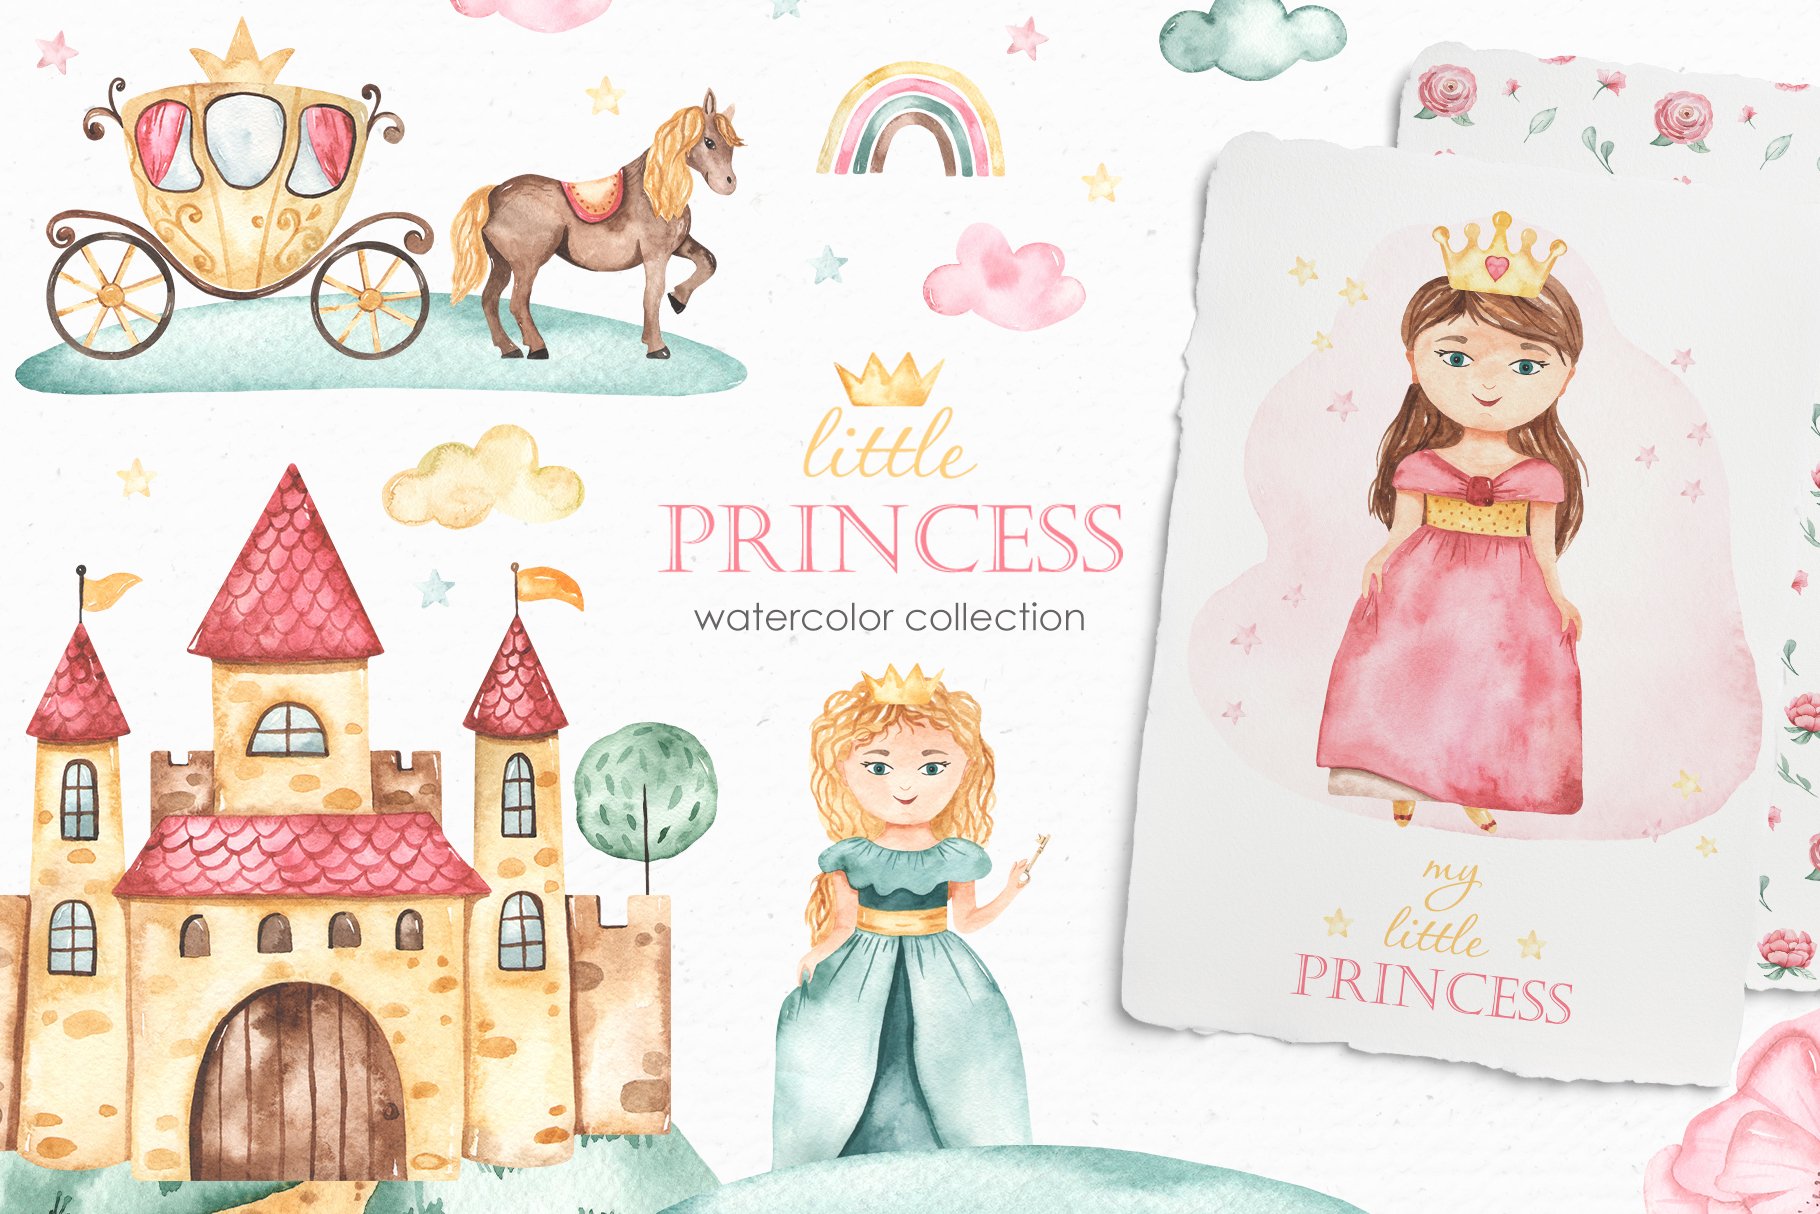 Little princess watercolor cover image.